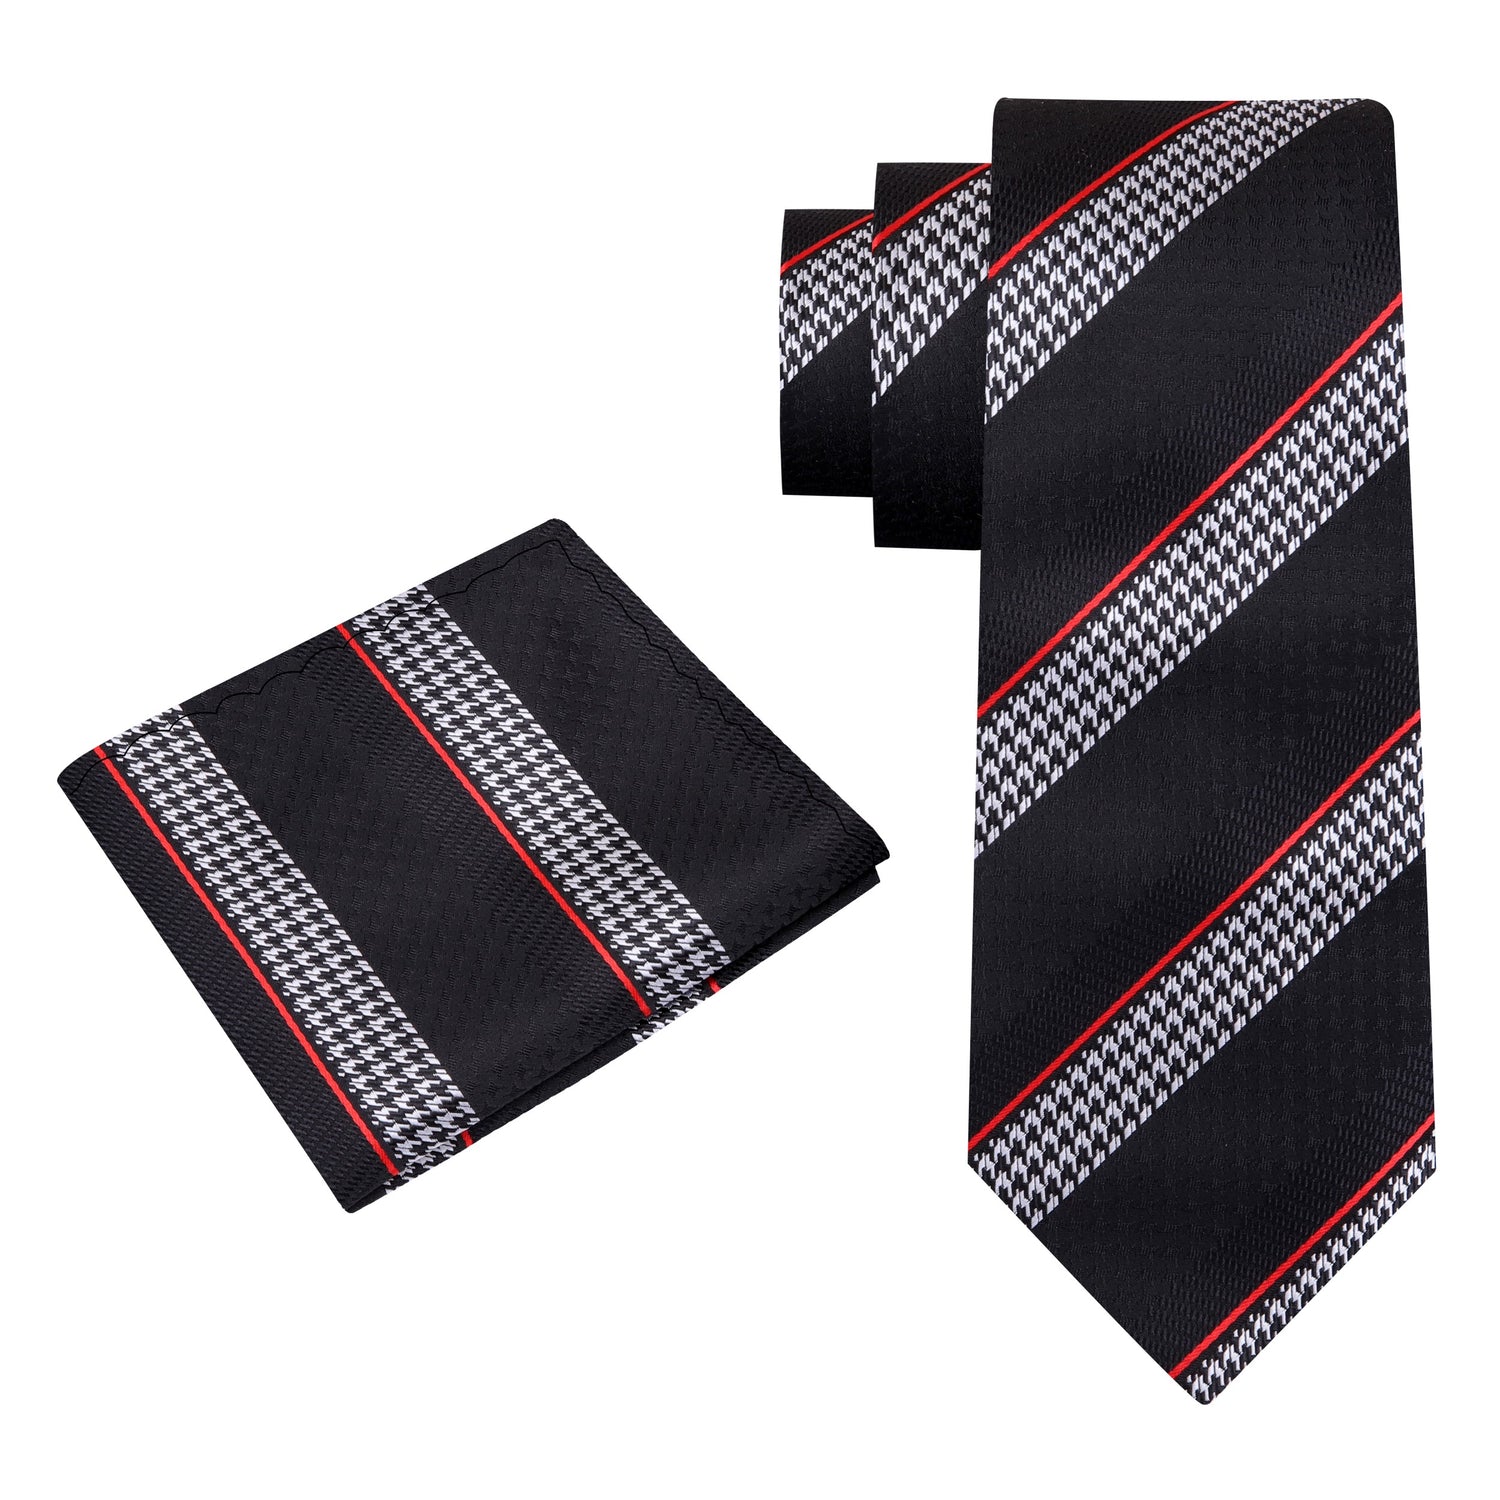 Alt View: A Black, Grey, Red Stripe With Houndstooth Pattern Silk Necktie, Matching Pocket Square